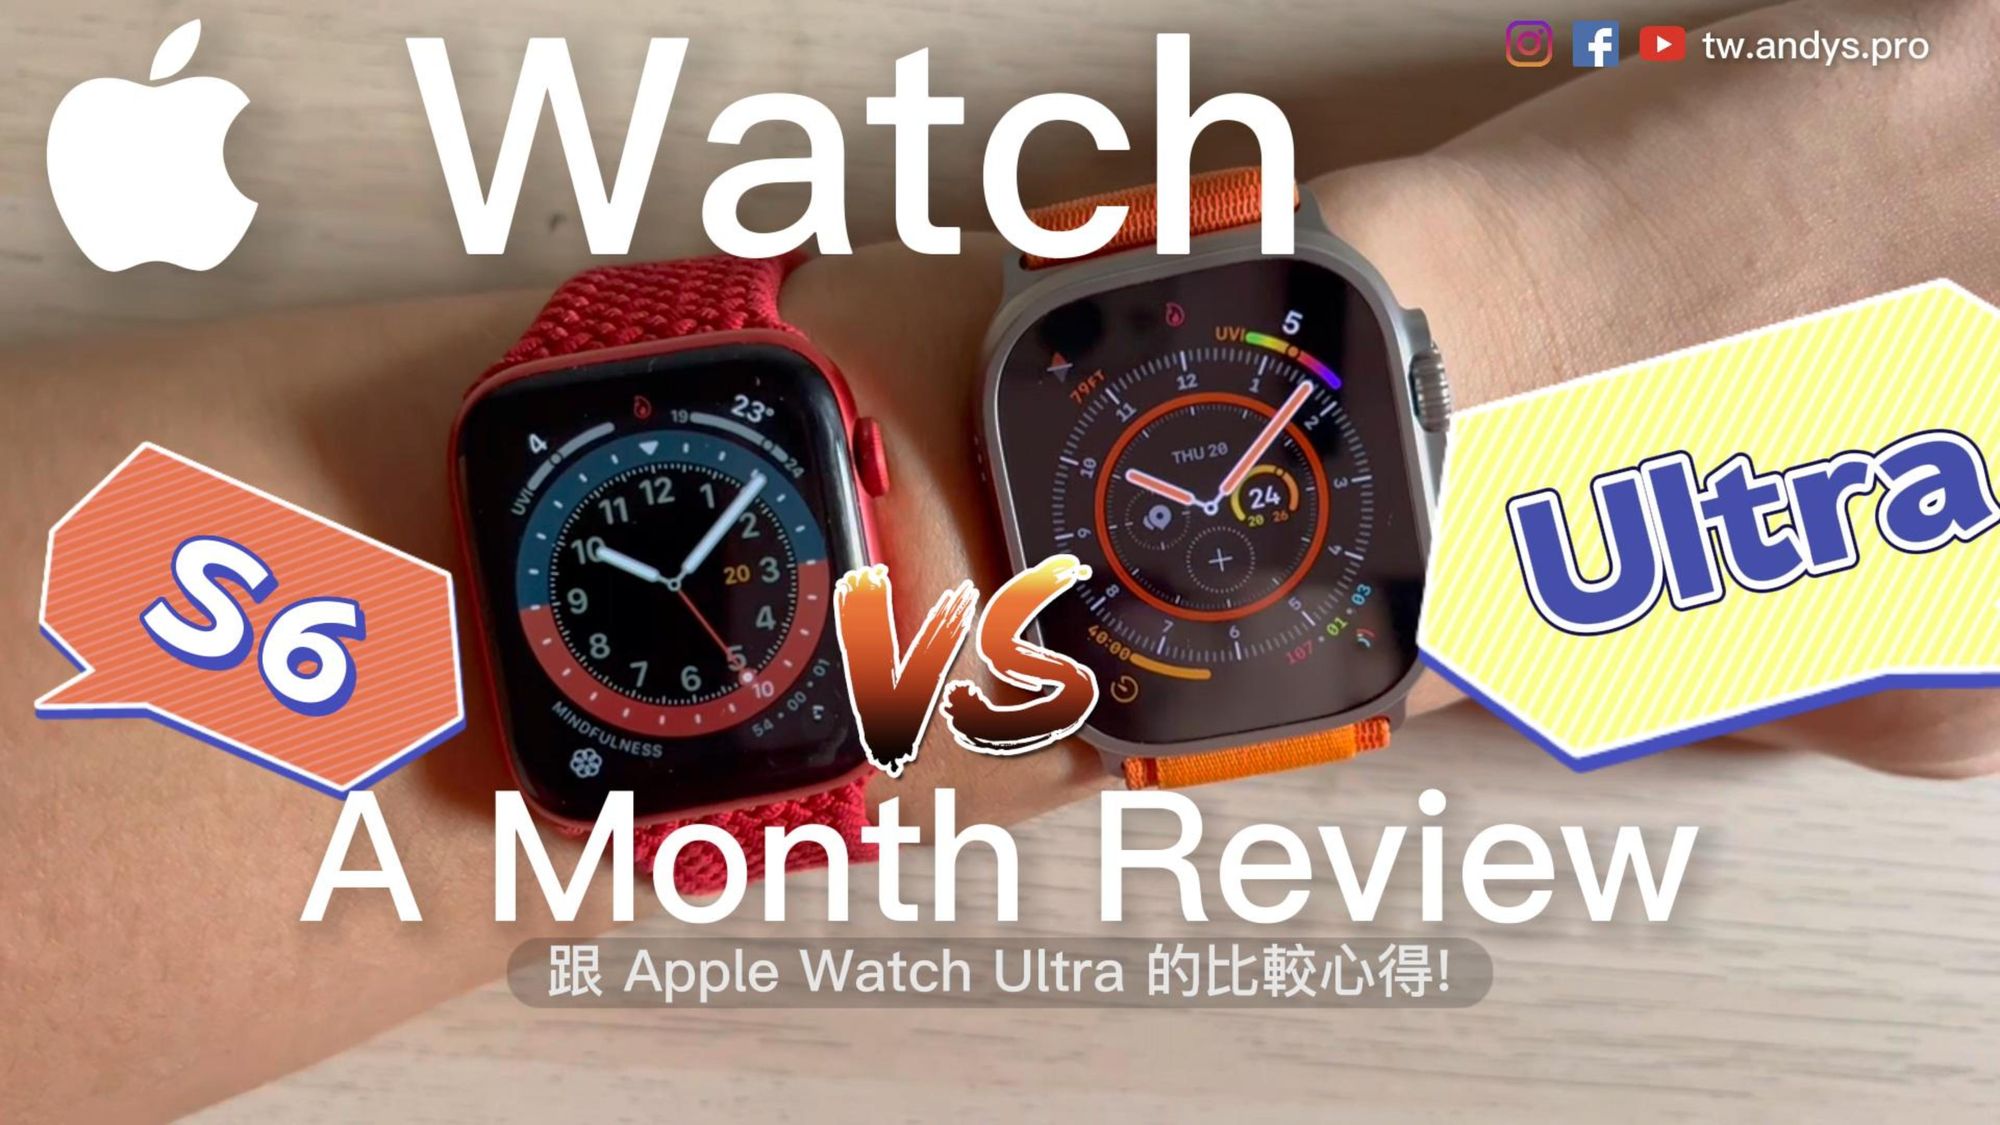 Apple Watch Ultra 一個月使用心得! 對比 S6 值得升級嗎?全方面體驗分析! 4K60HDR